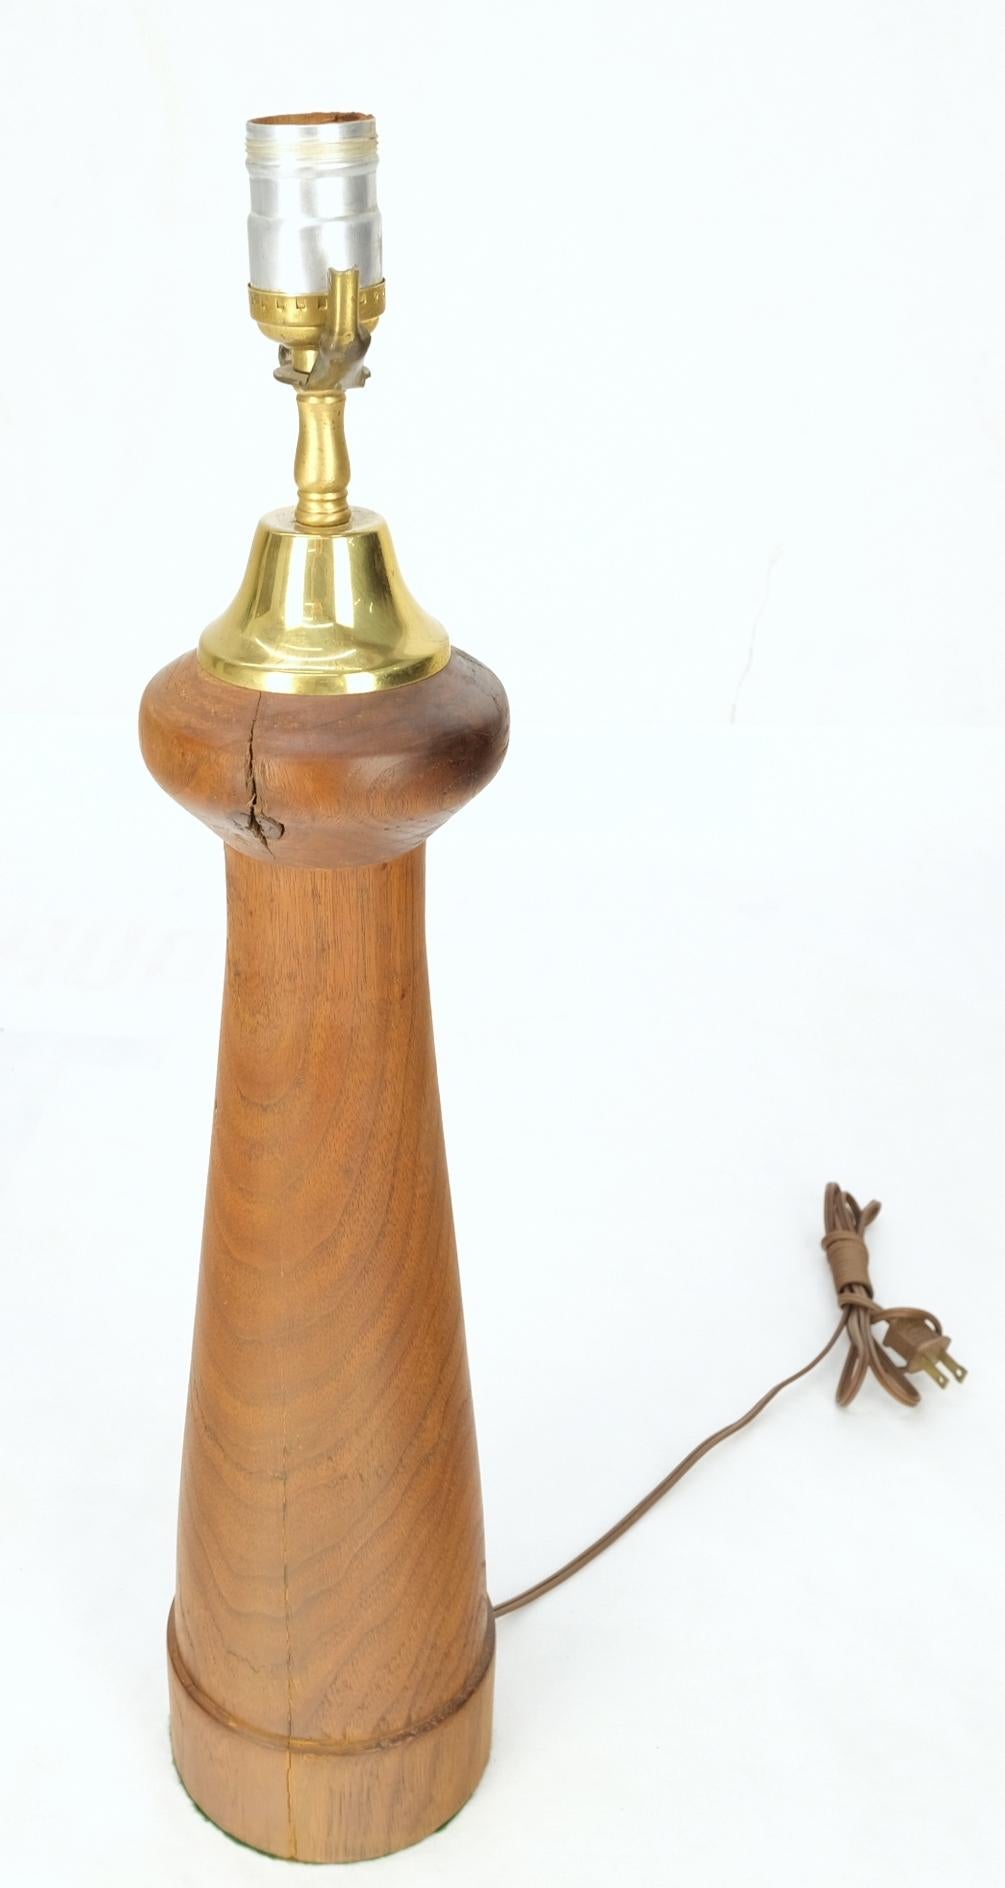 Turned Walnut or Teak Mid-Century Modern Table Lamp, c.1970s For Sale 5